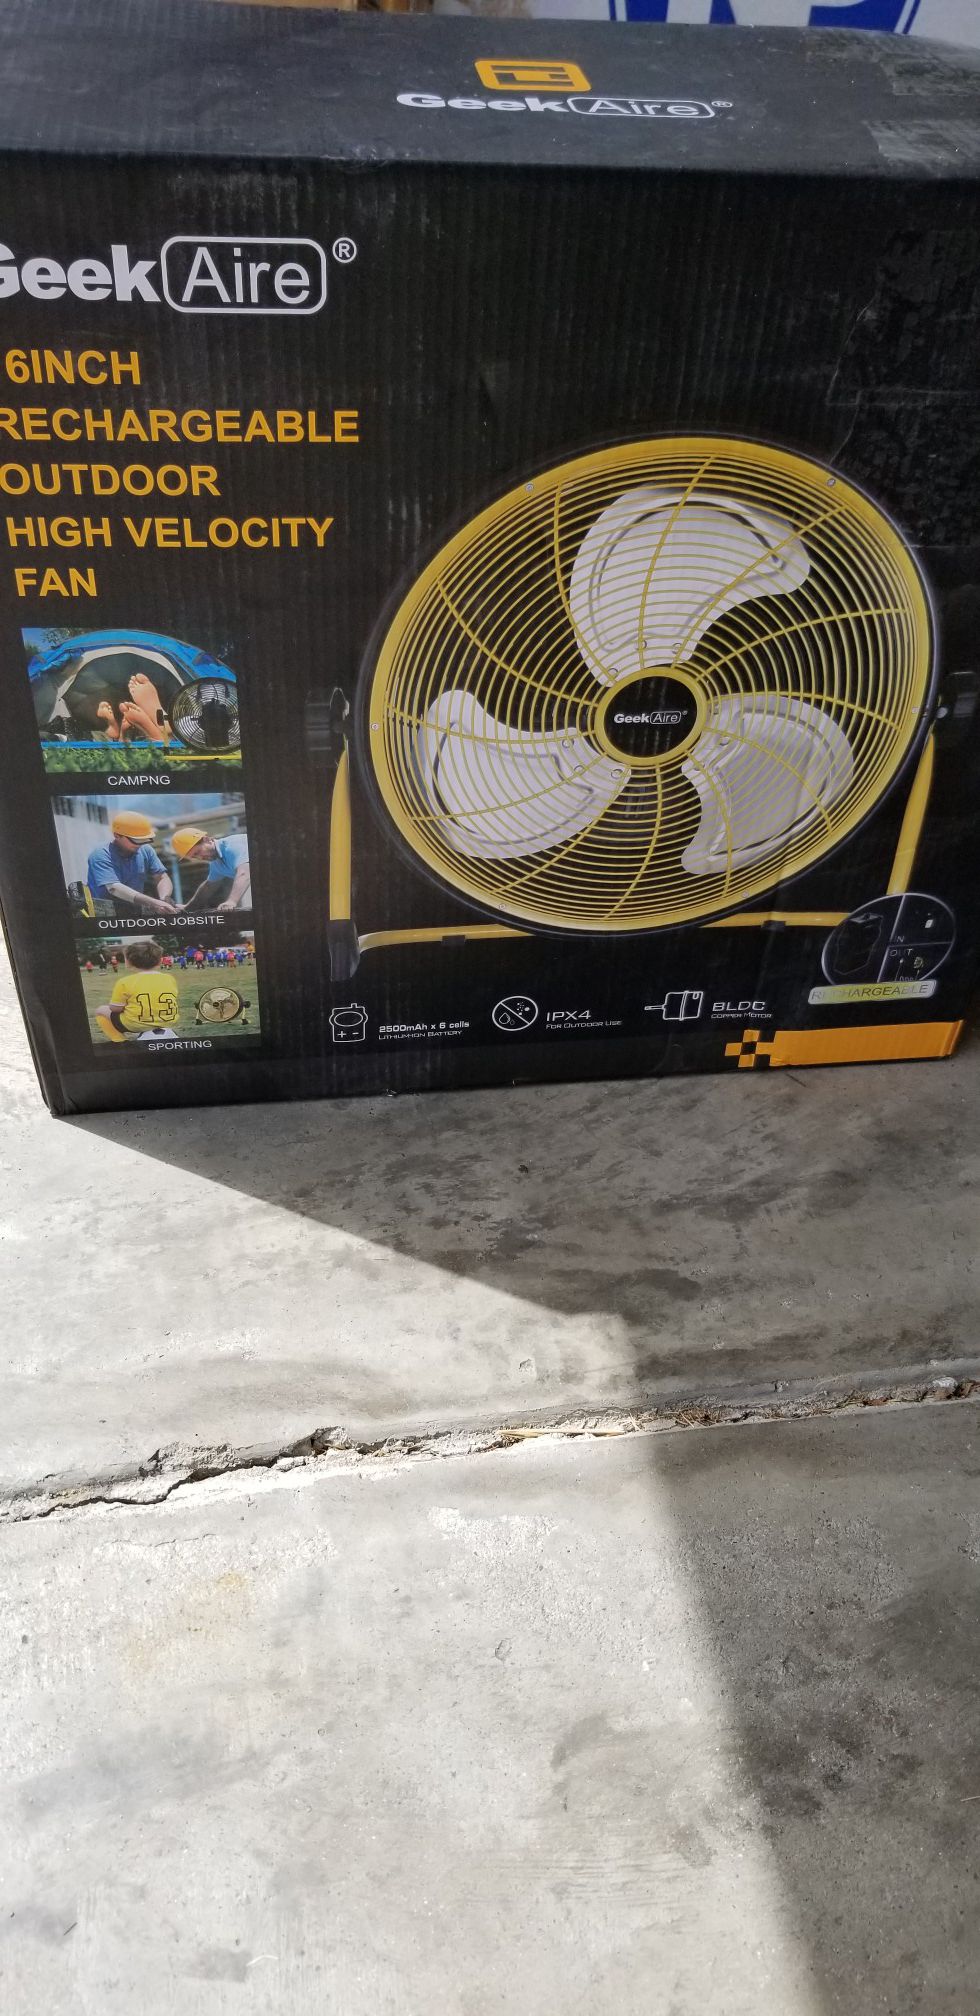 GeekAire Rechargeable Outdoor High Velocity Floor Fan,16'' Portable